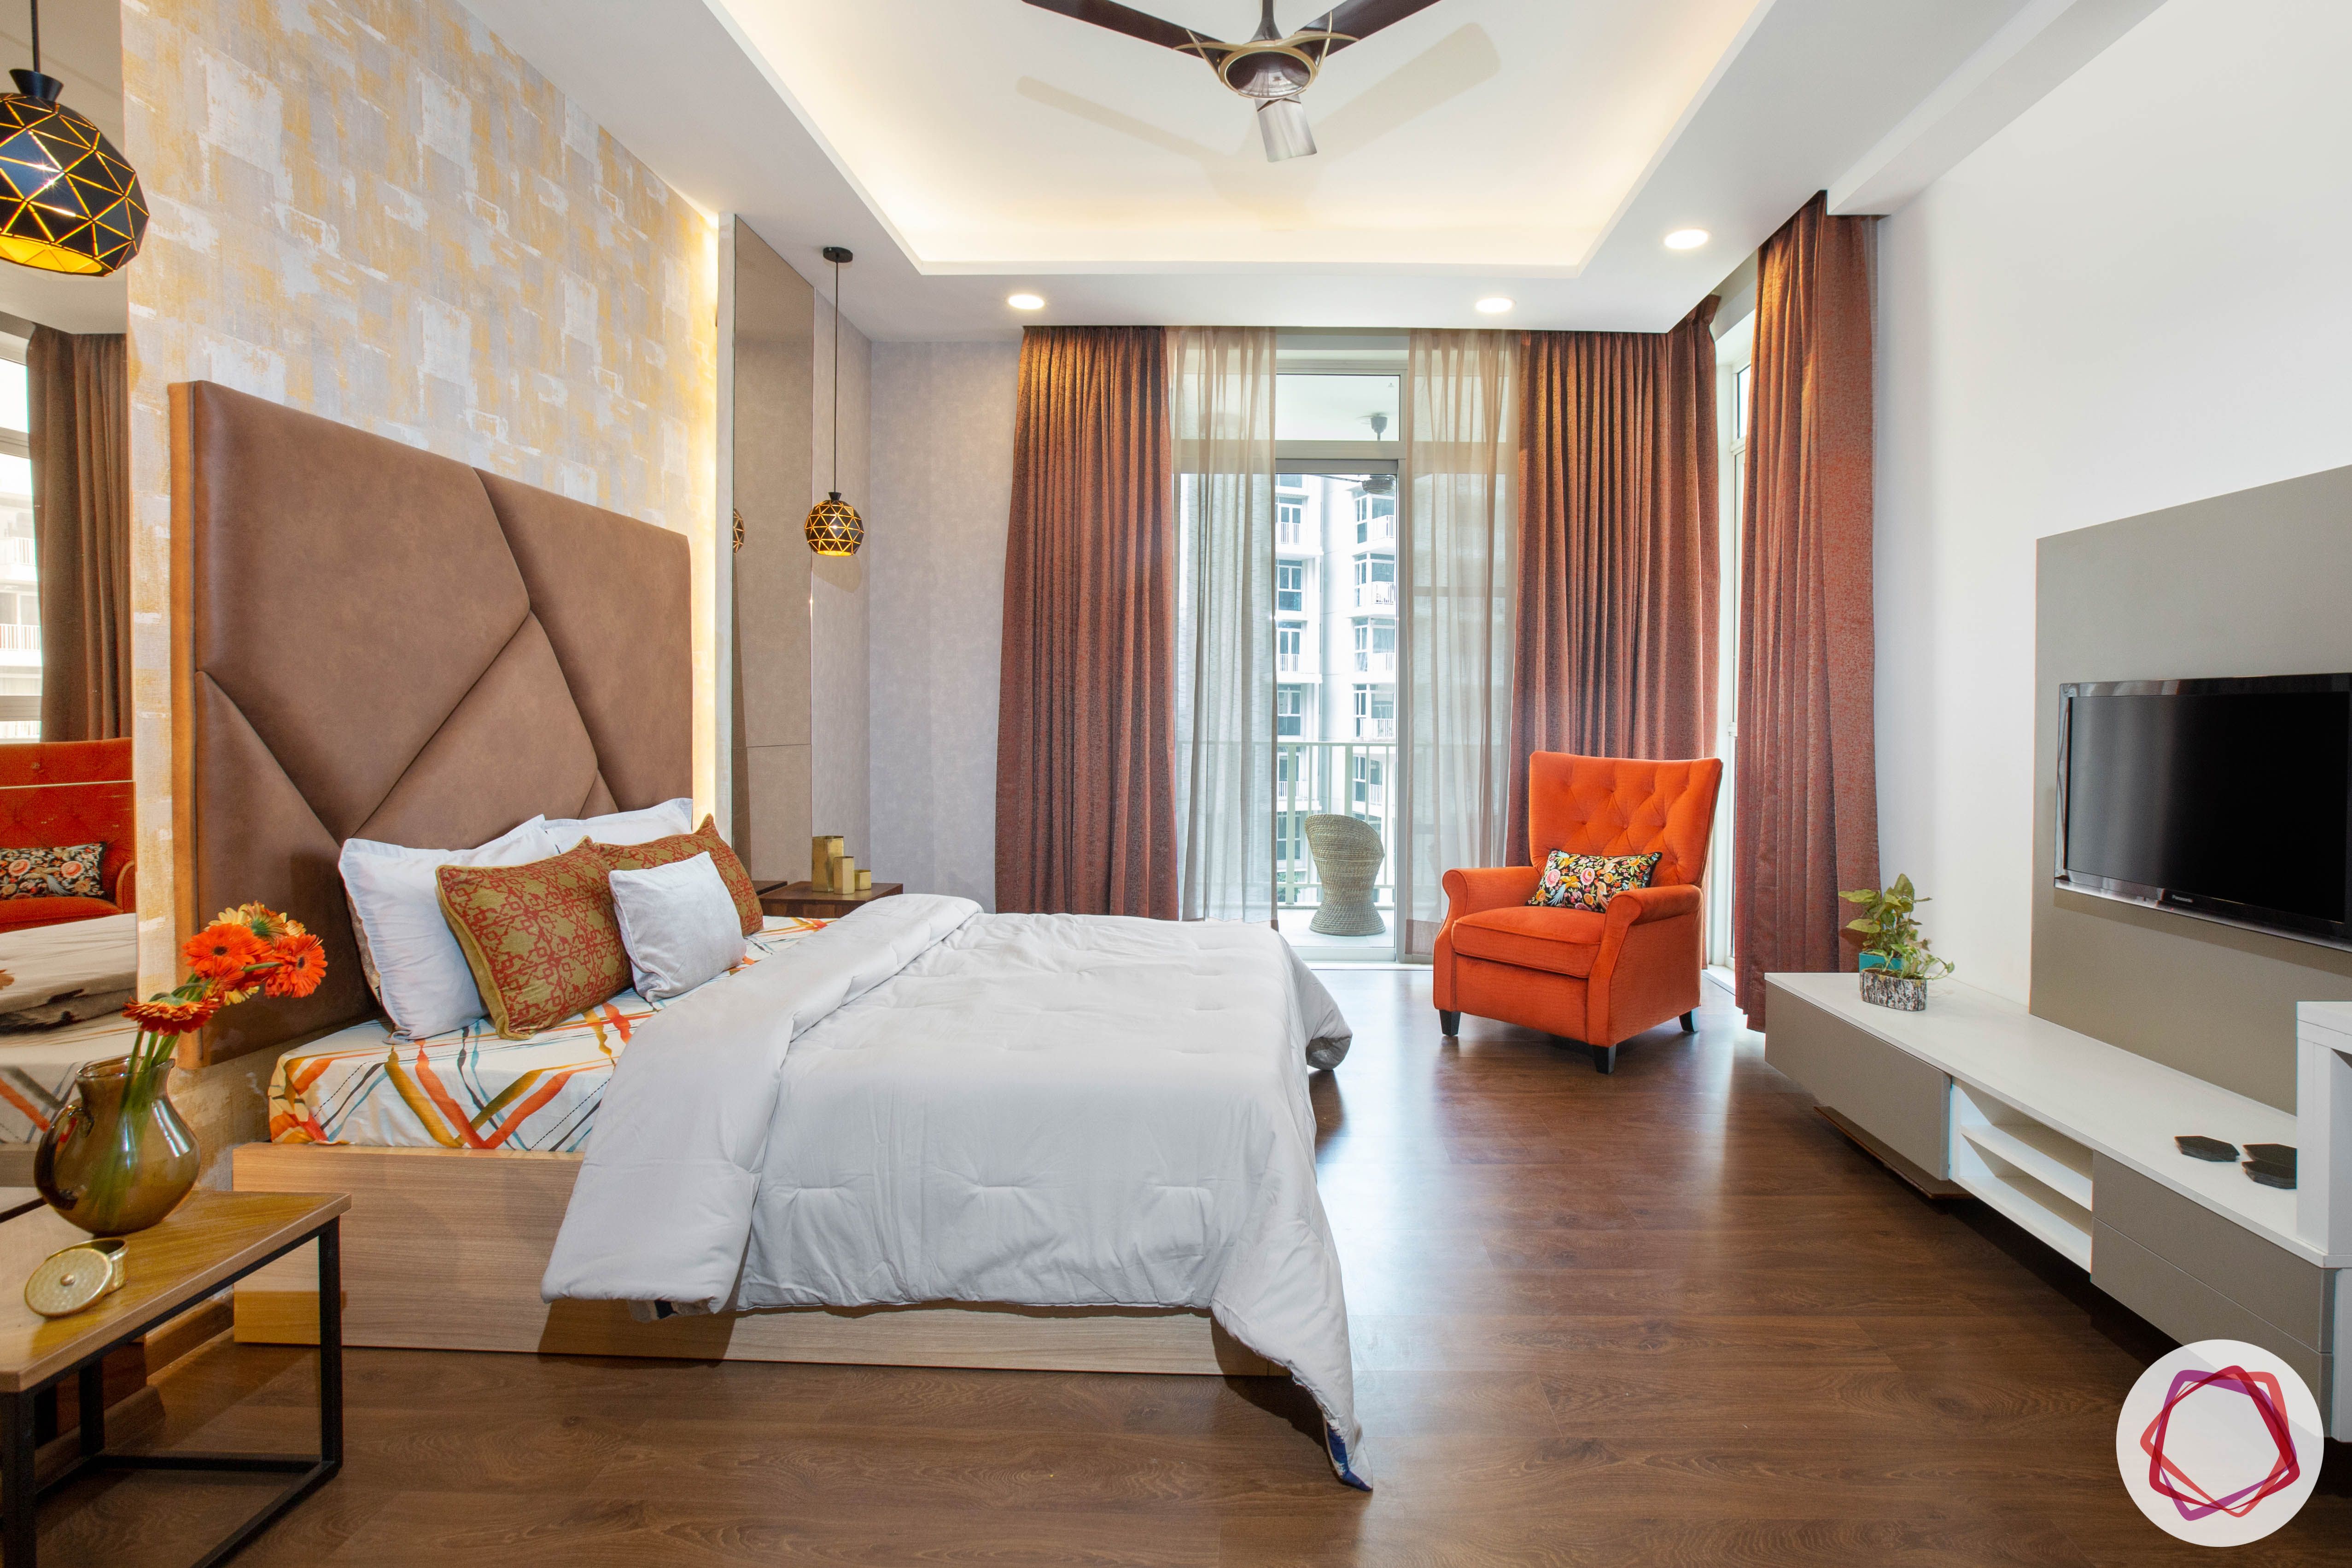 bedroom sofa-brown bedroom-orange chair
